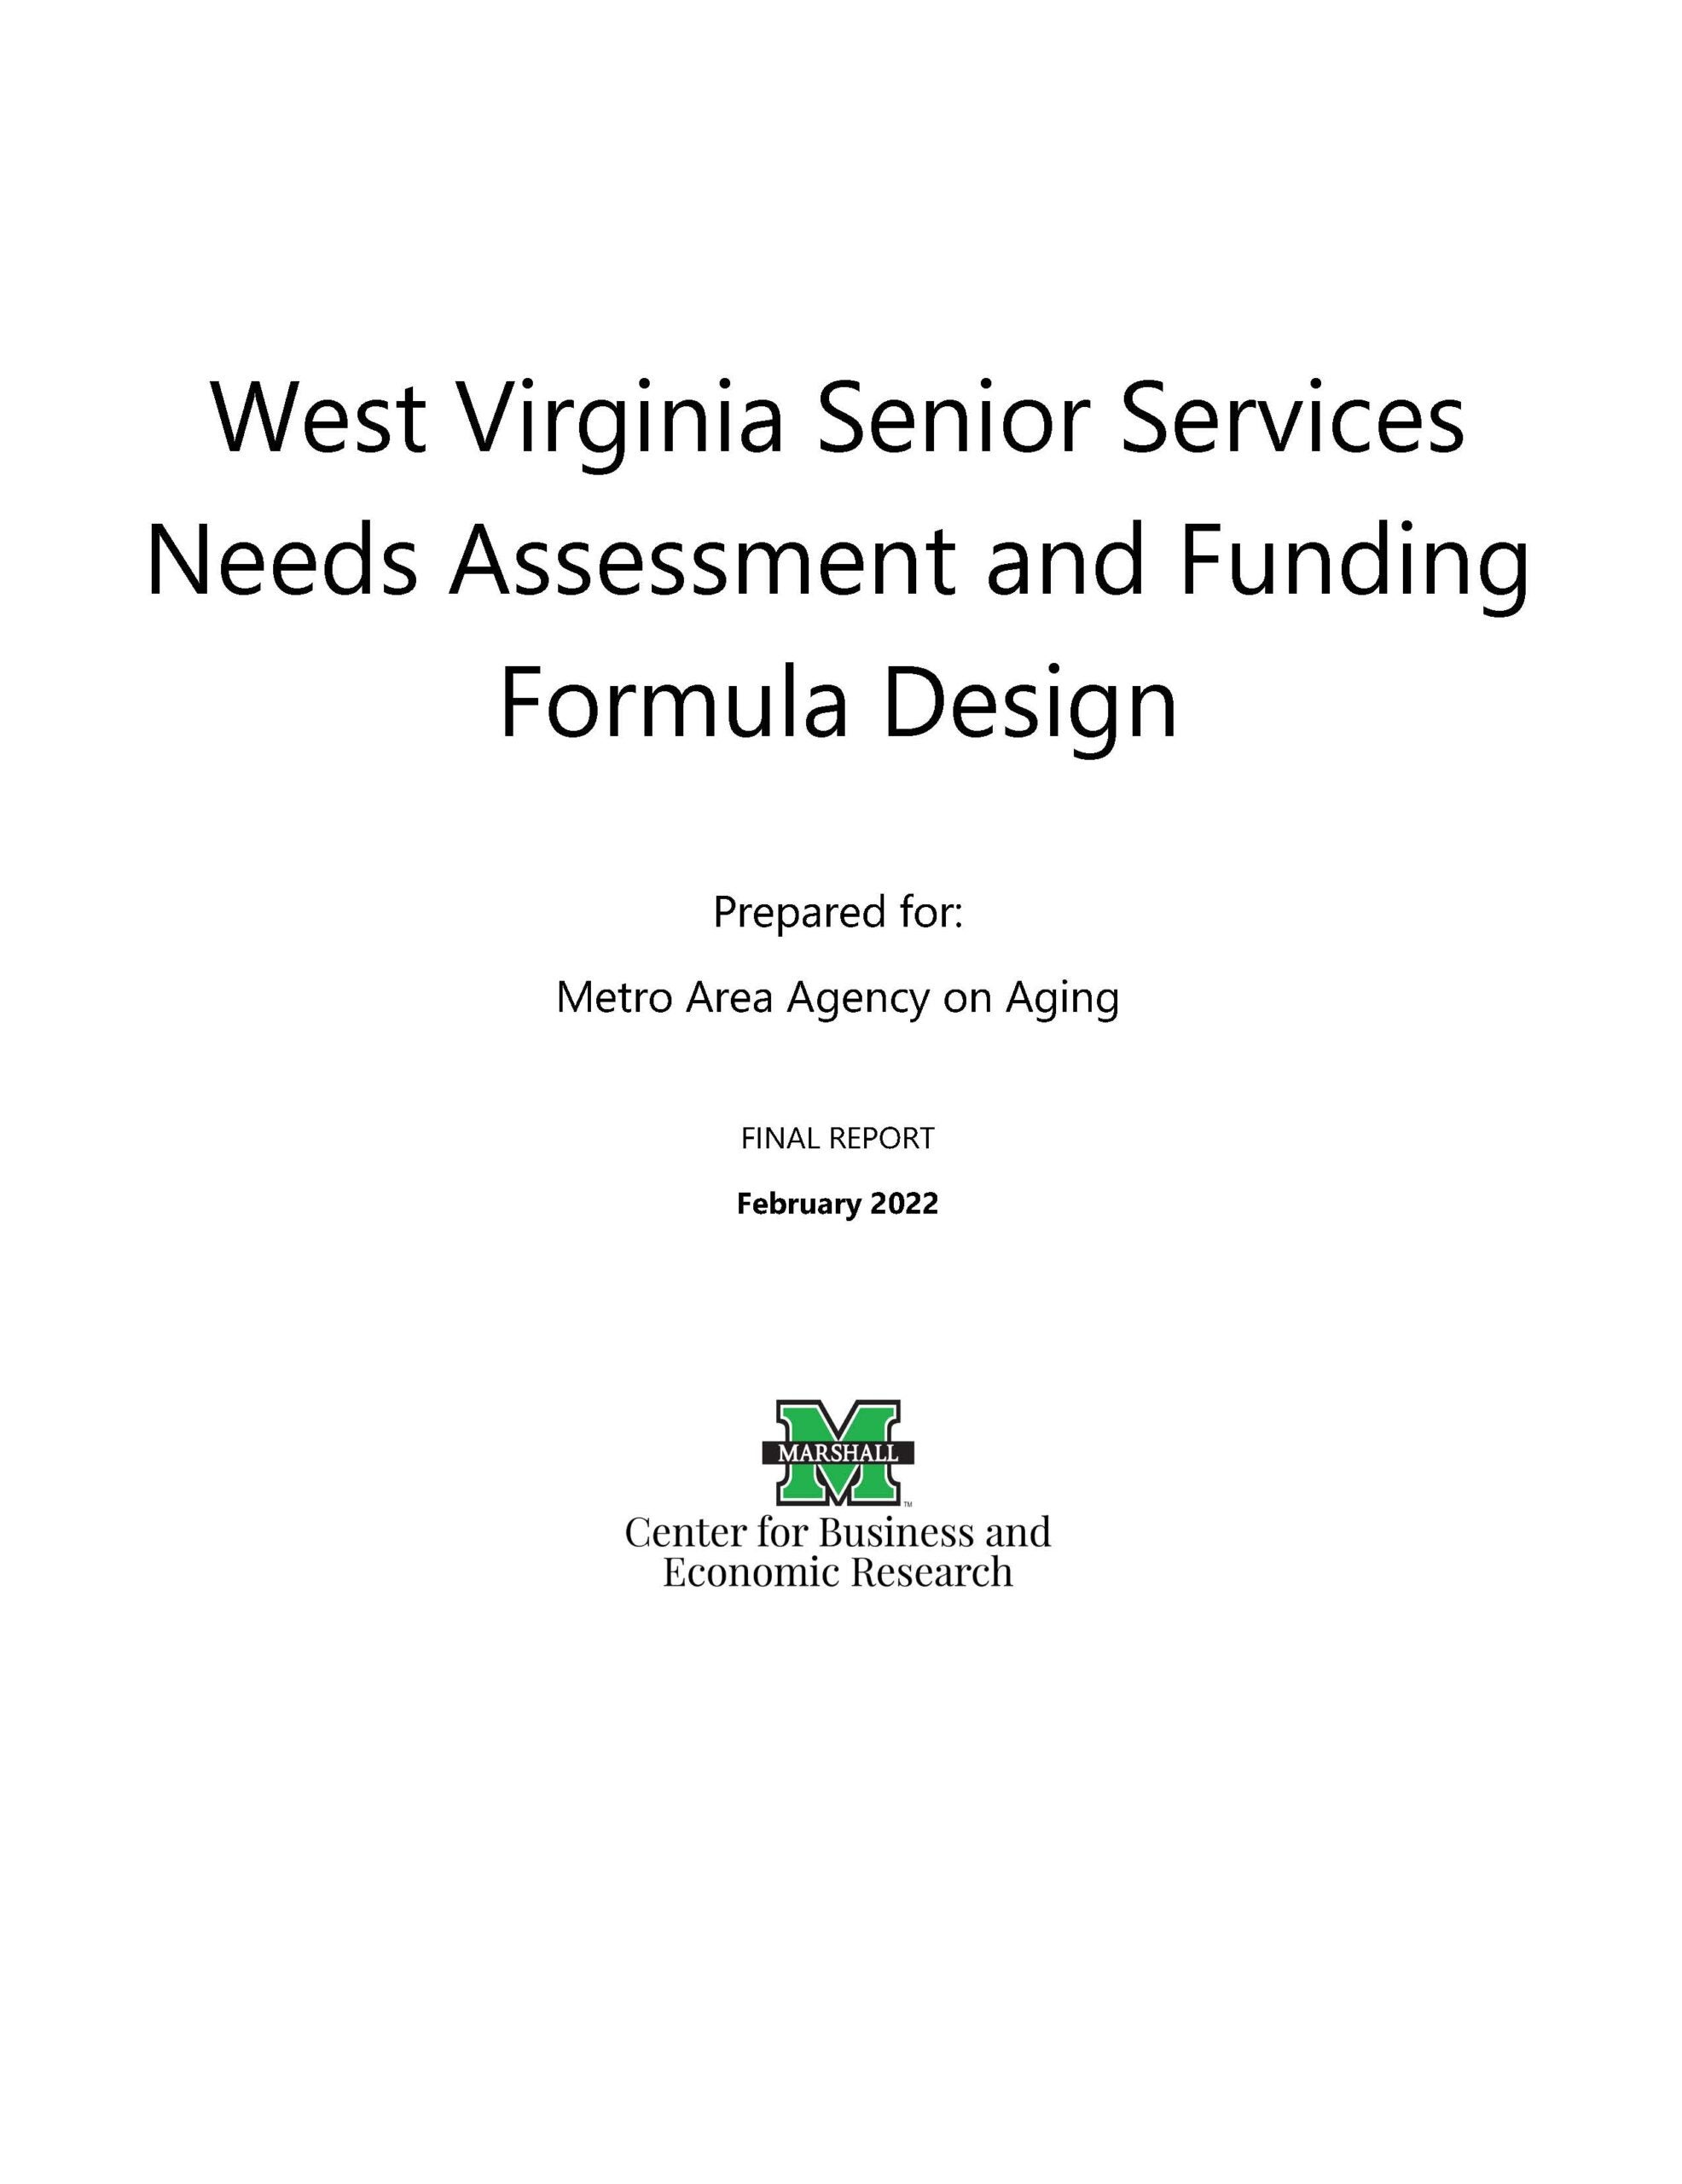 2022_02_10-WV_Senior_Services_Needs_Assessment_Funding_Formula_Design 